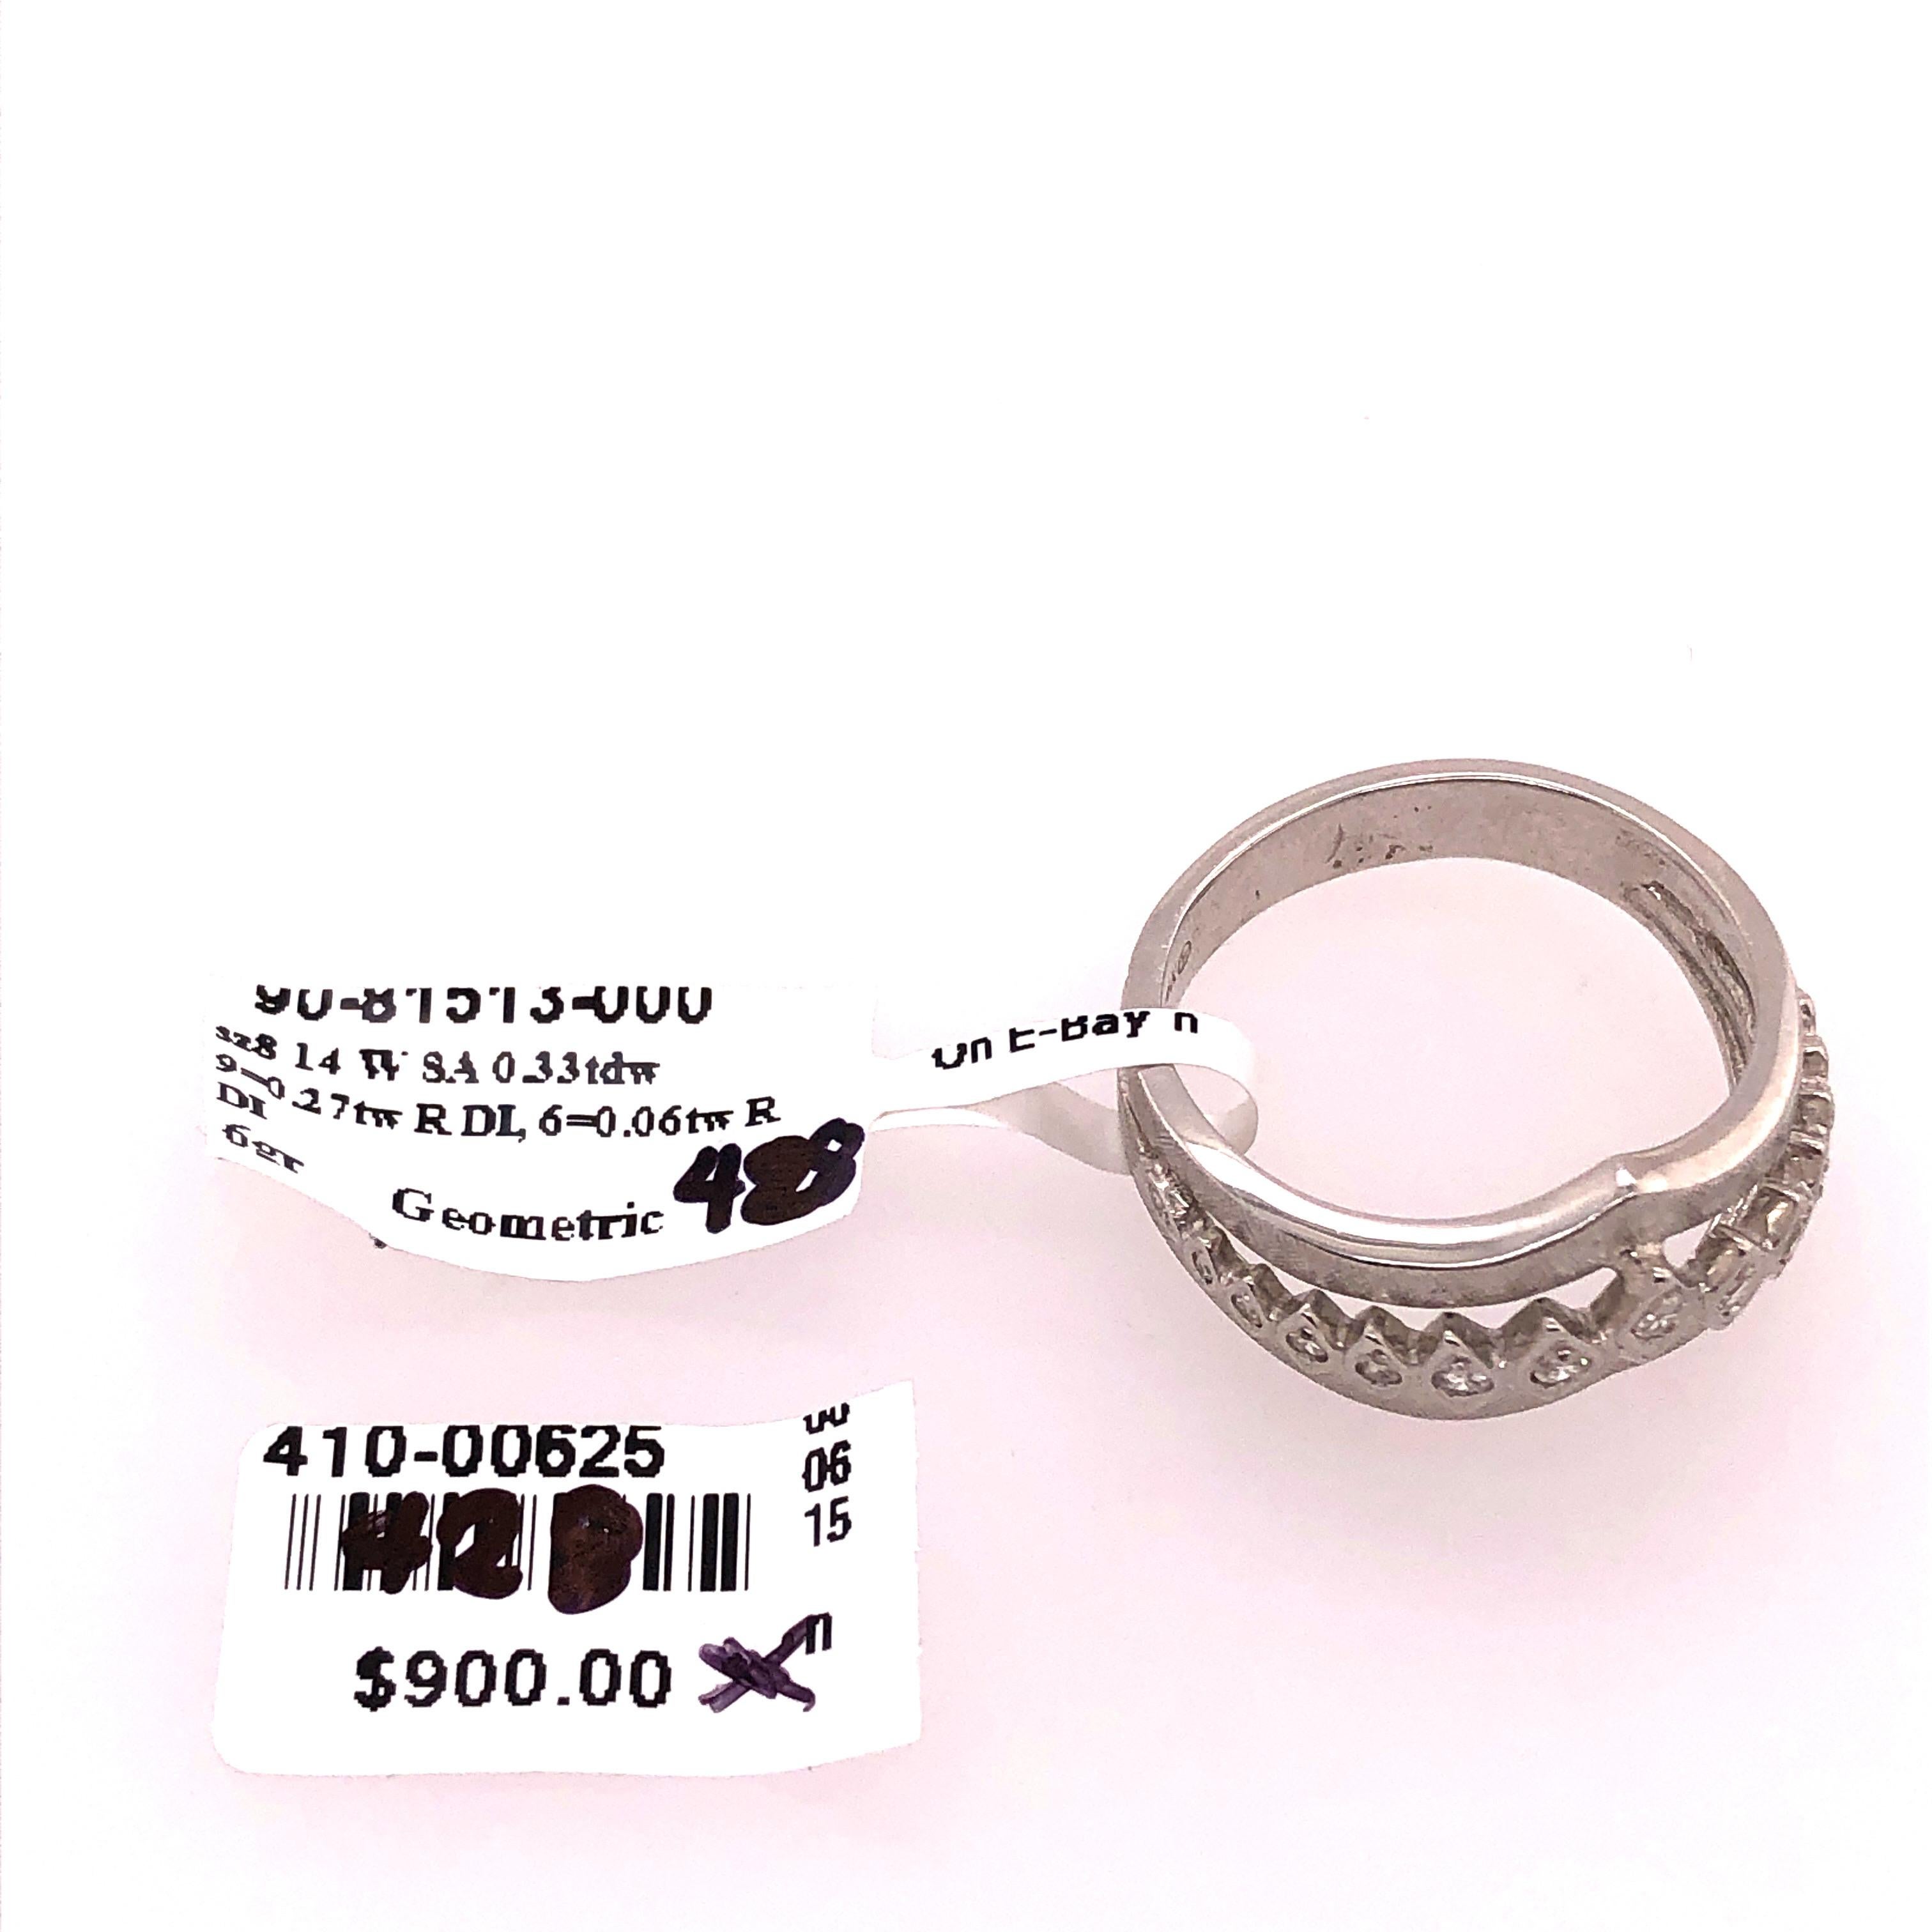 14 Karat White Gold and Diamond Geometric Ring or Bridal Band 0.33 TDW For Sale 8